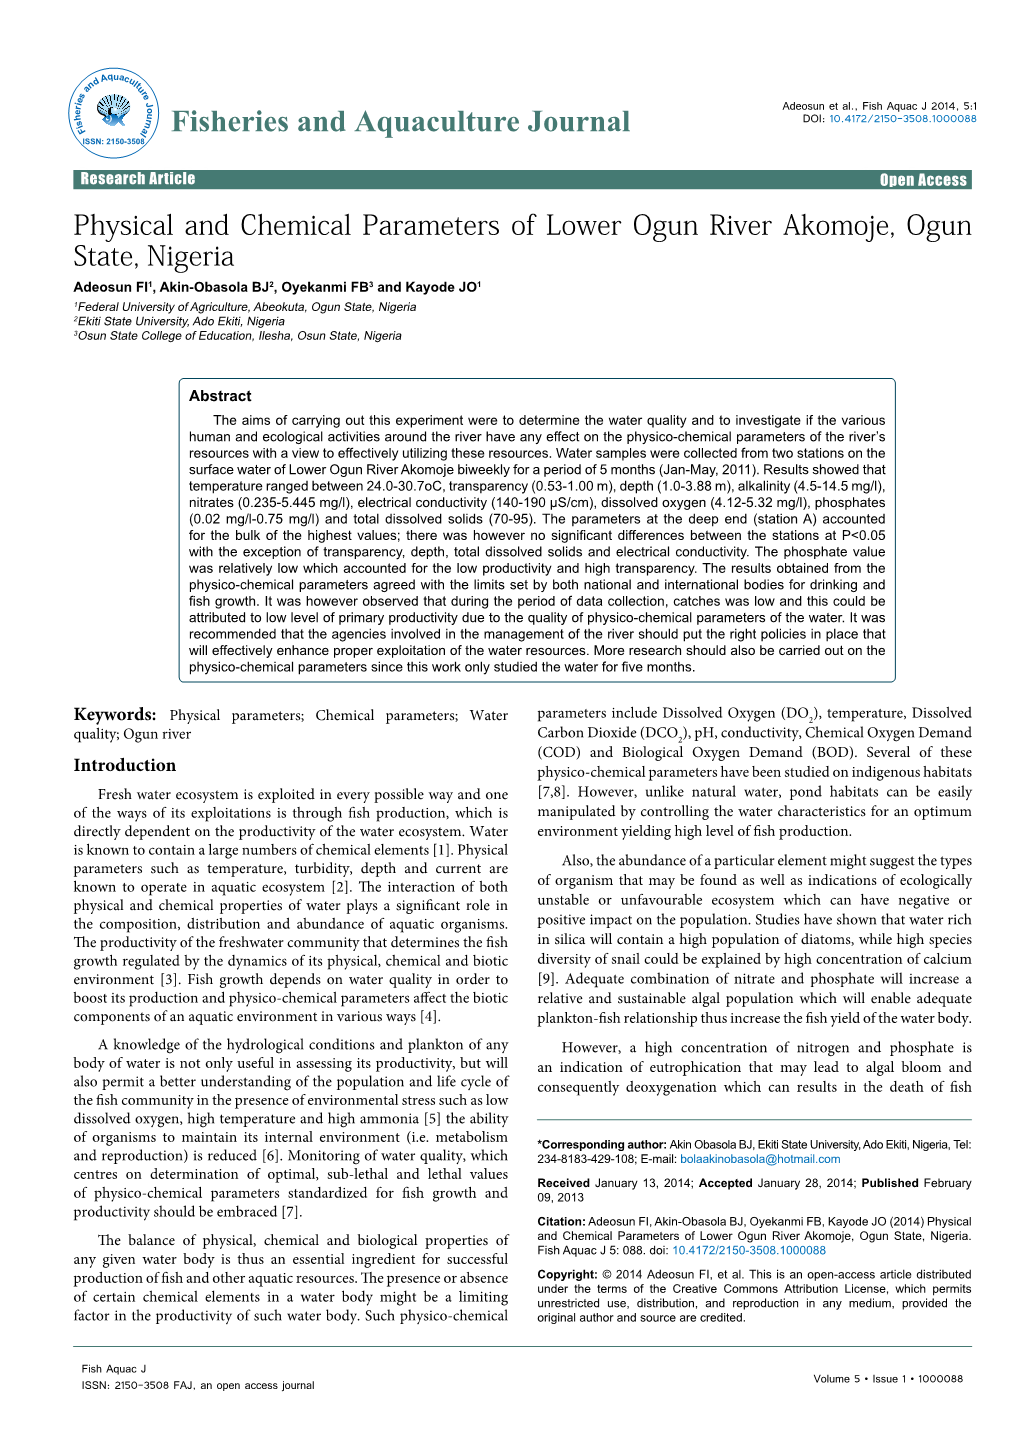 Physical and Chemical Parameters of Lower Ogun River Akomoje, Ogun